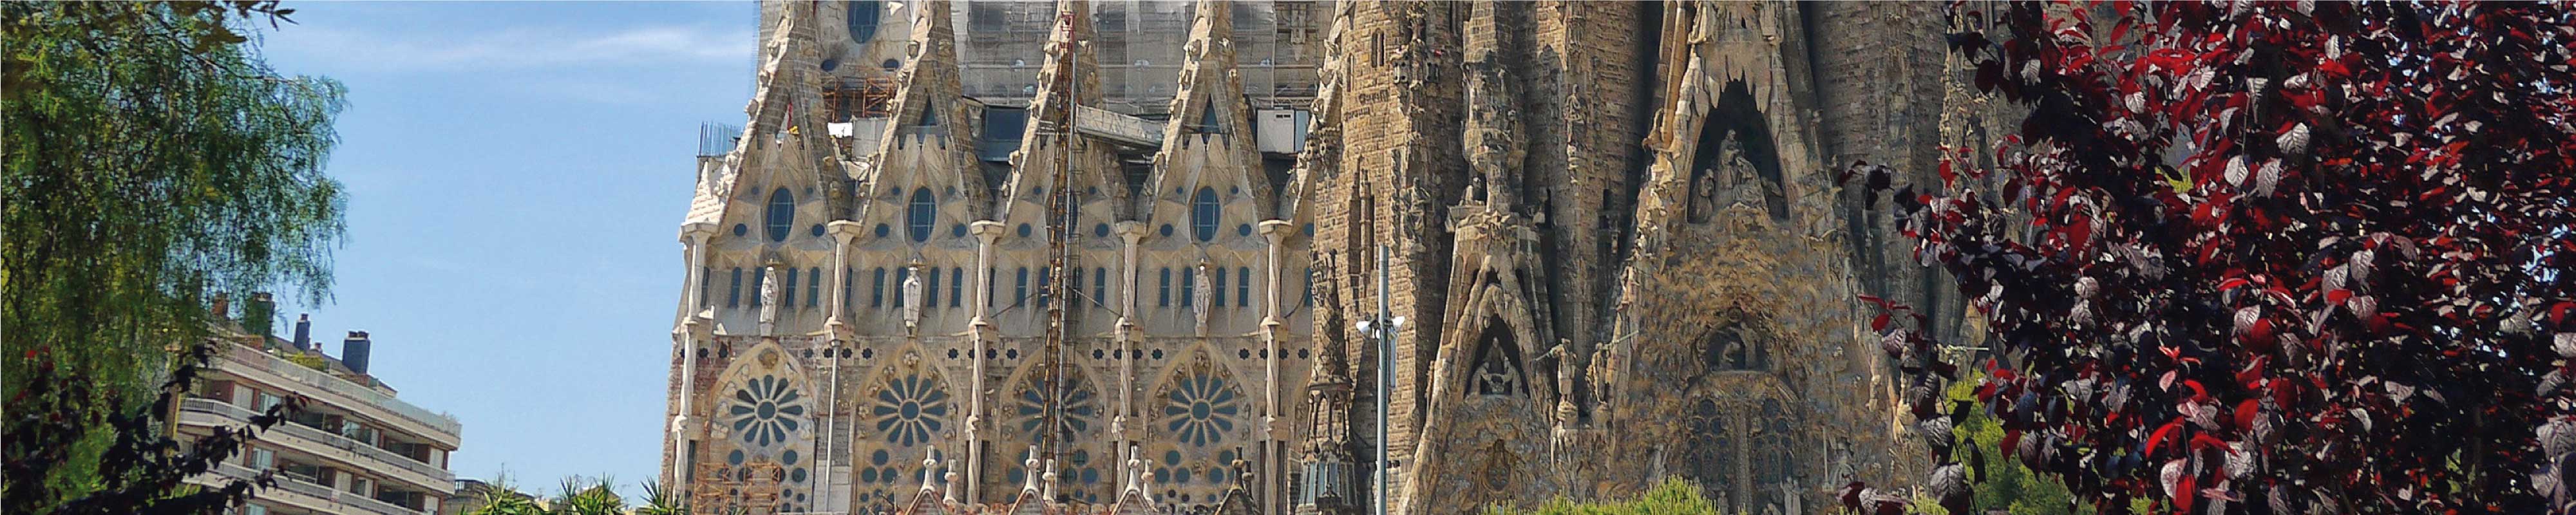 Consigna Equipaje | Sagrada Família en Barcelona - Nannybag